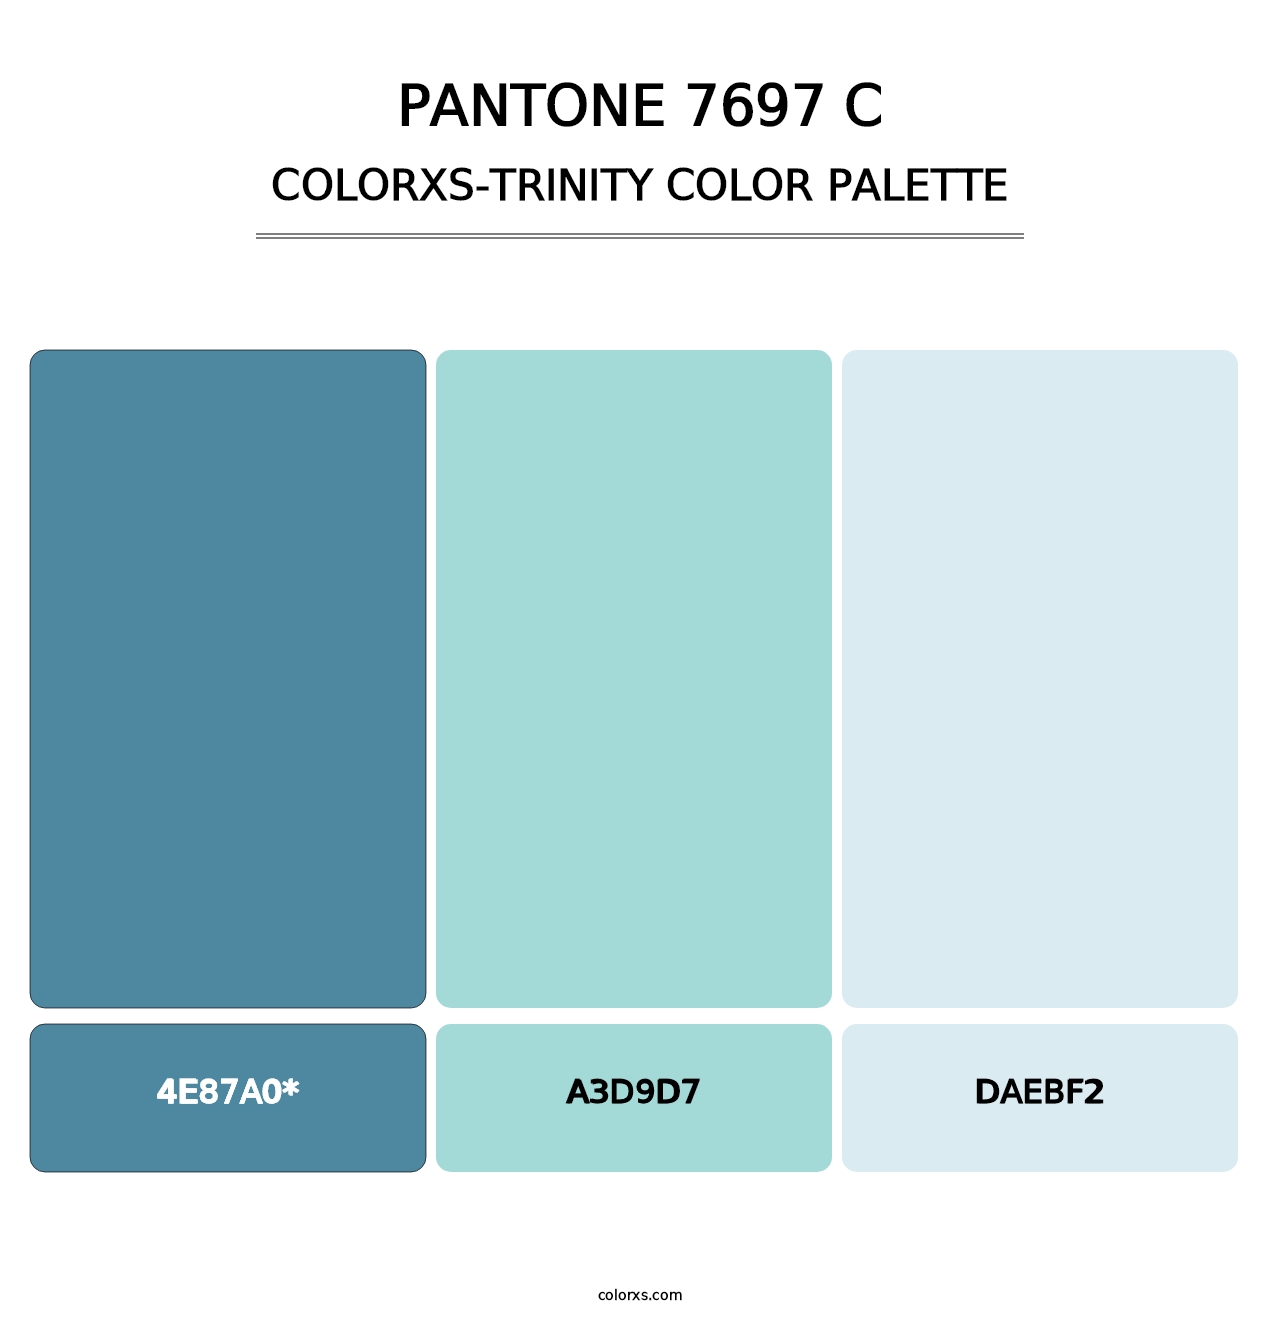 PANTONE 7697 C - Colorxs Trinity Palette